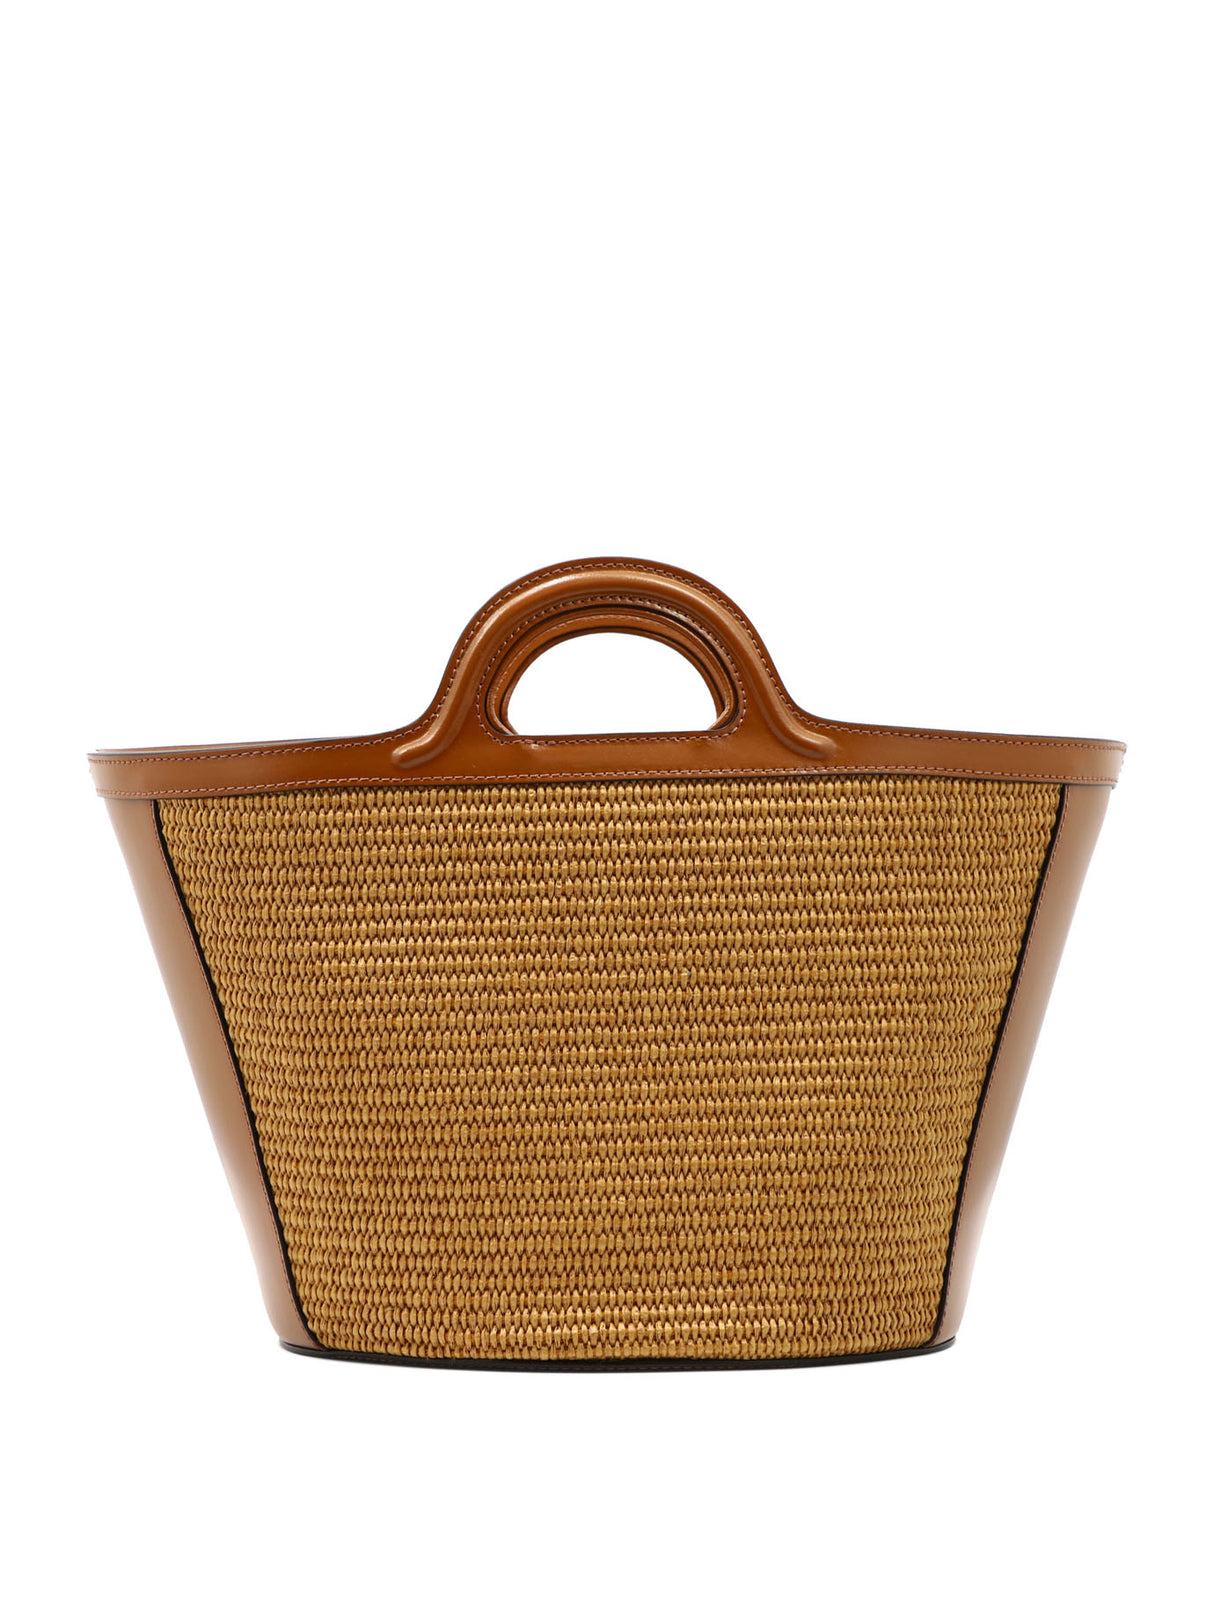 MARNI Women's Tropicalia Mini Handbag in Brown - Cotton Blend